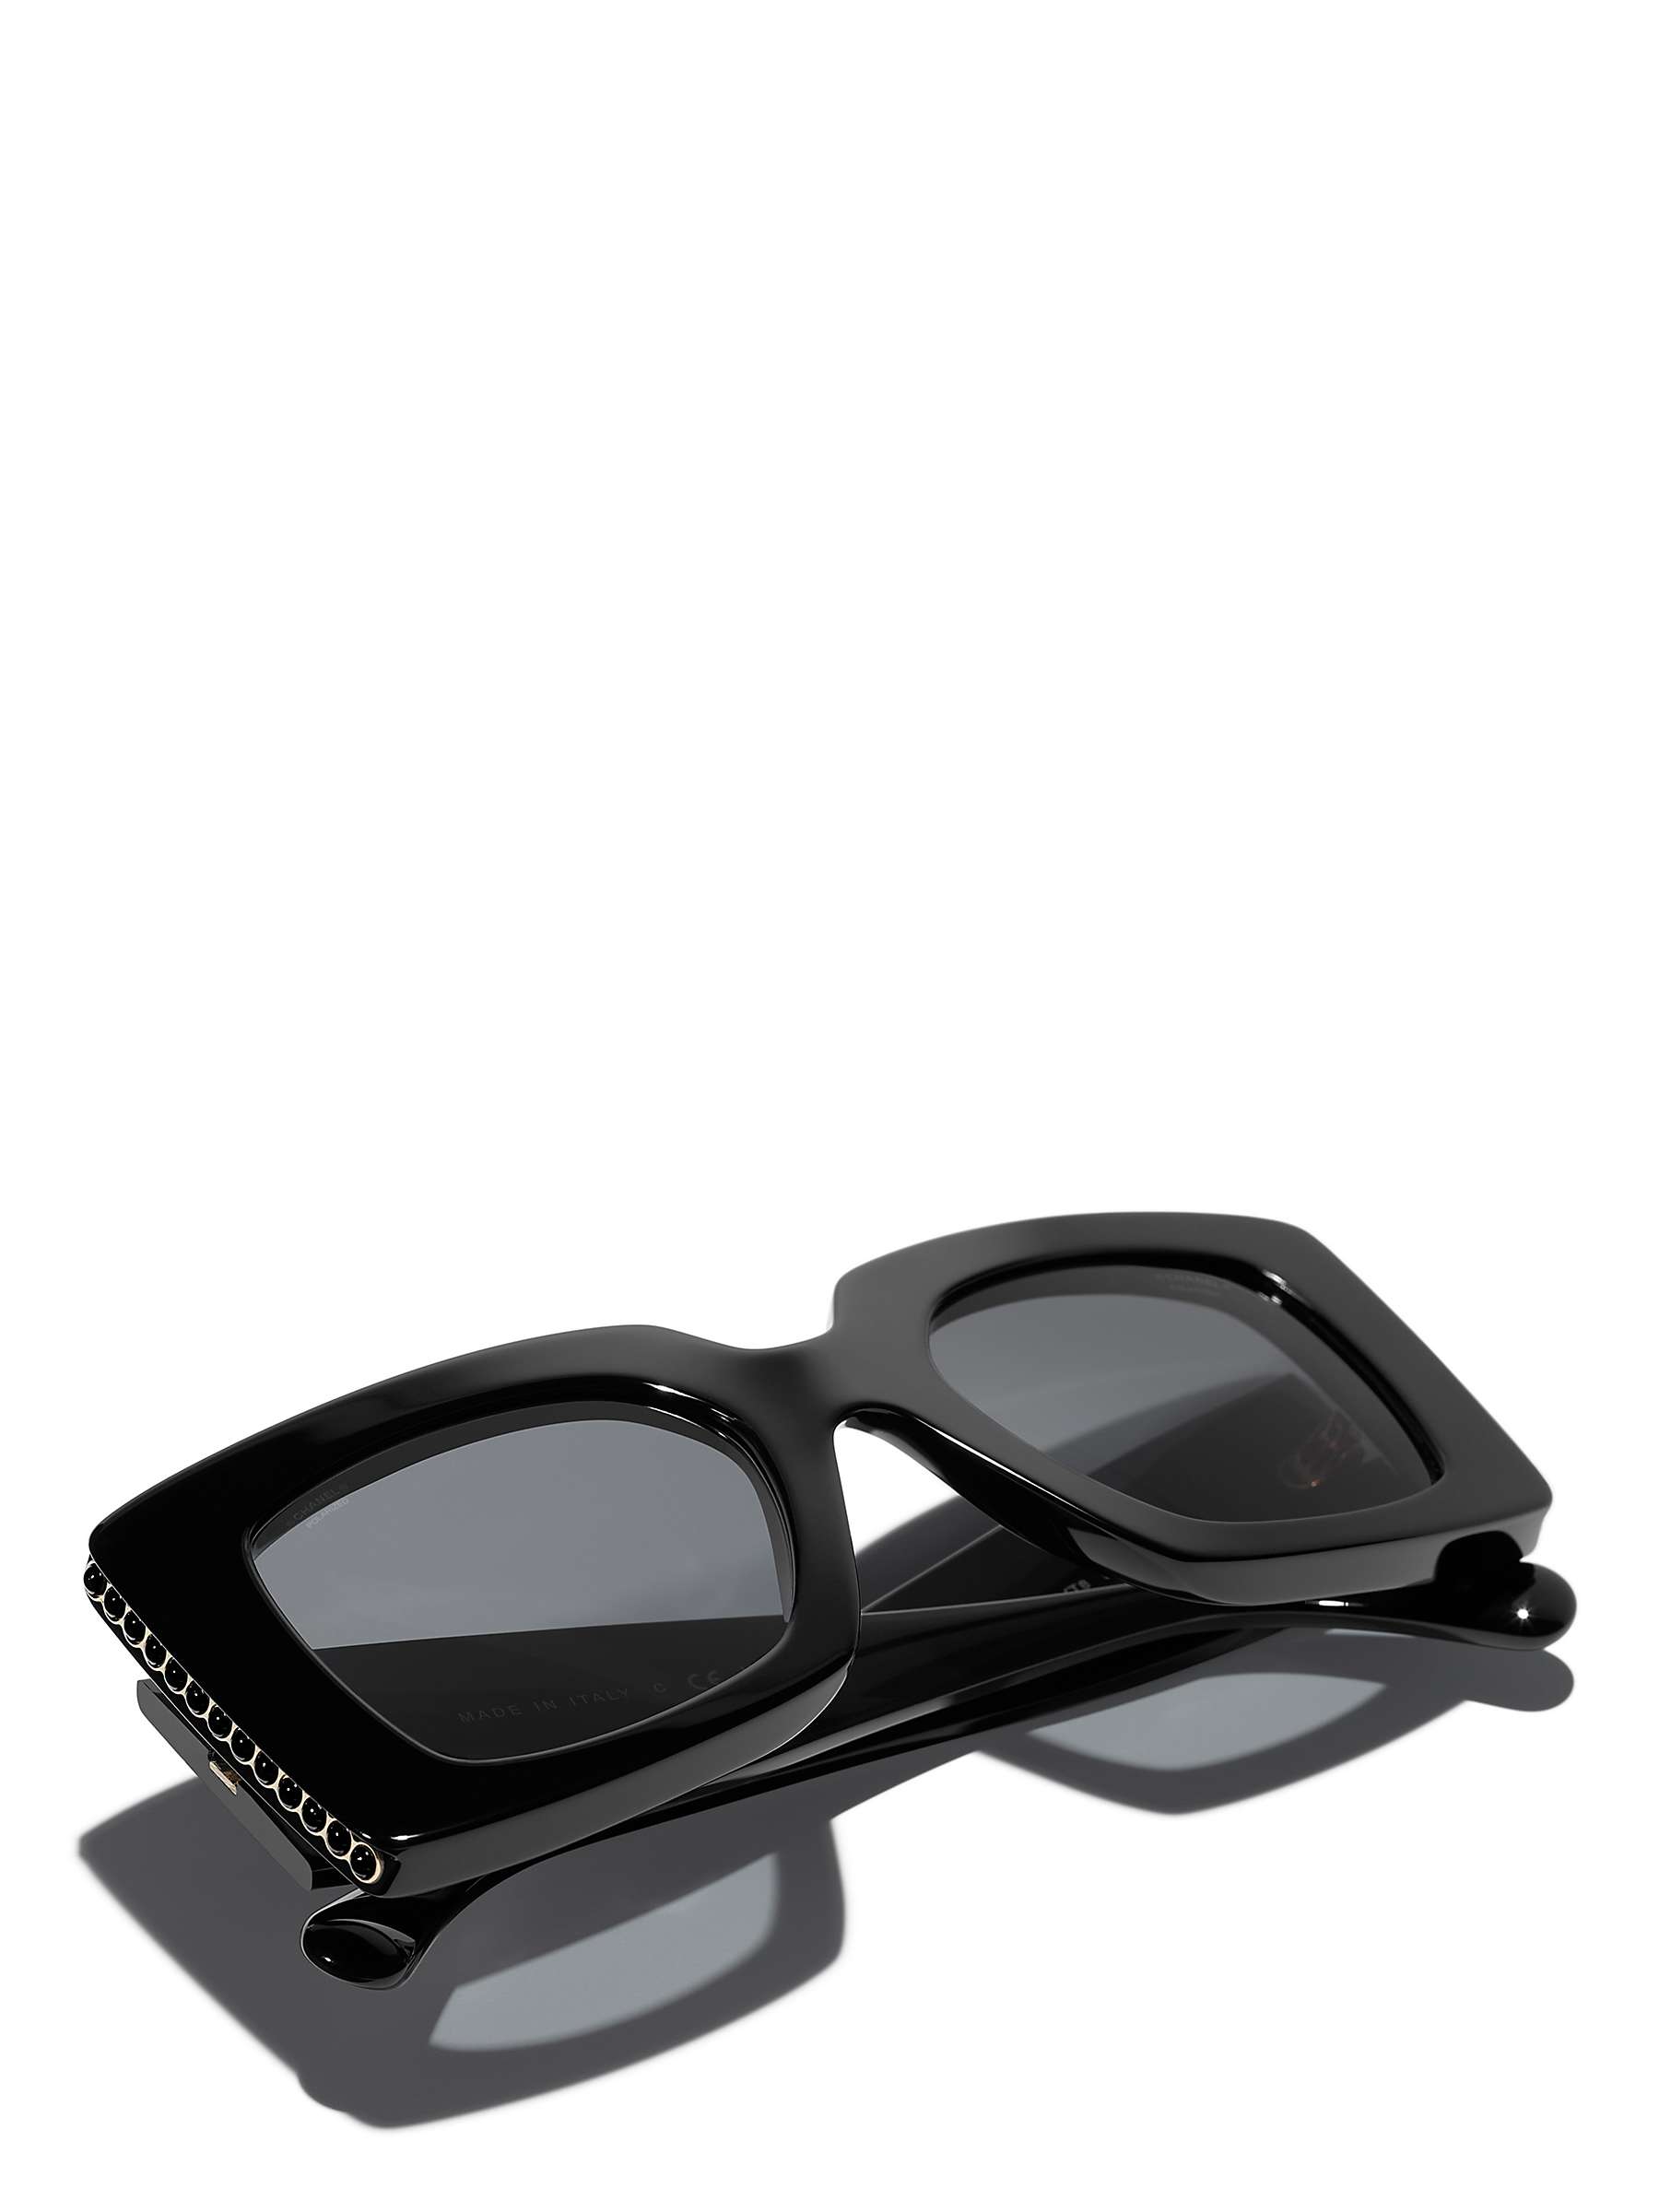 chanel acetate rectangle sunglasses